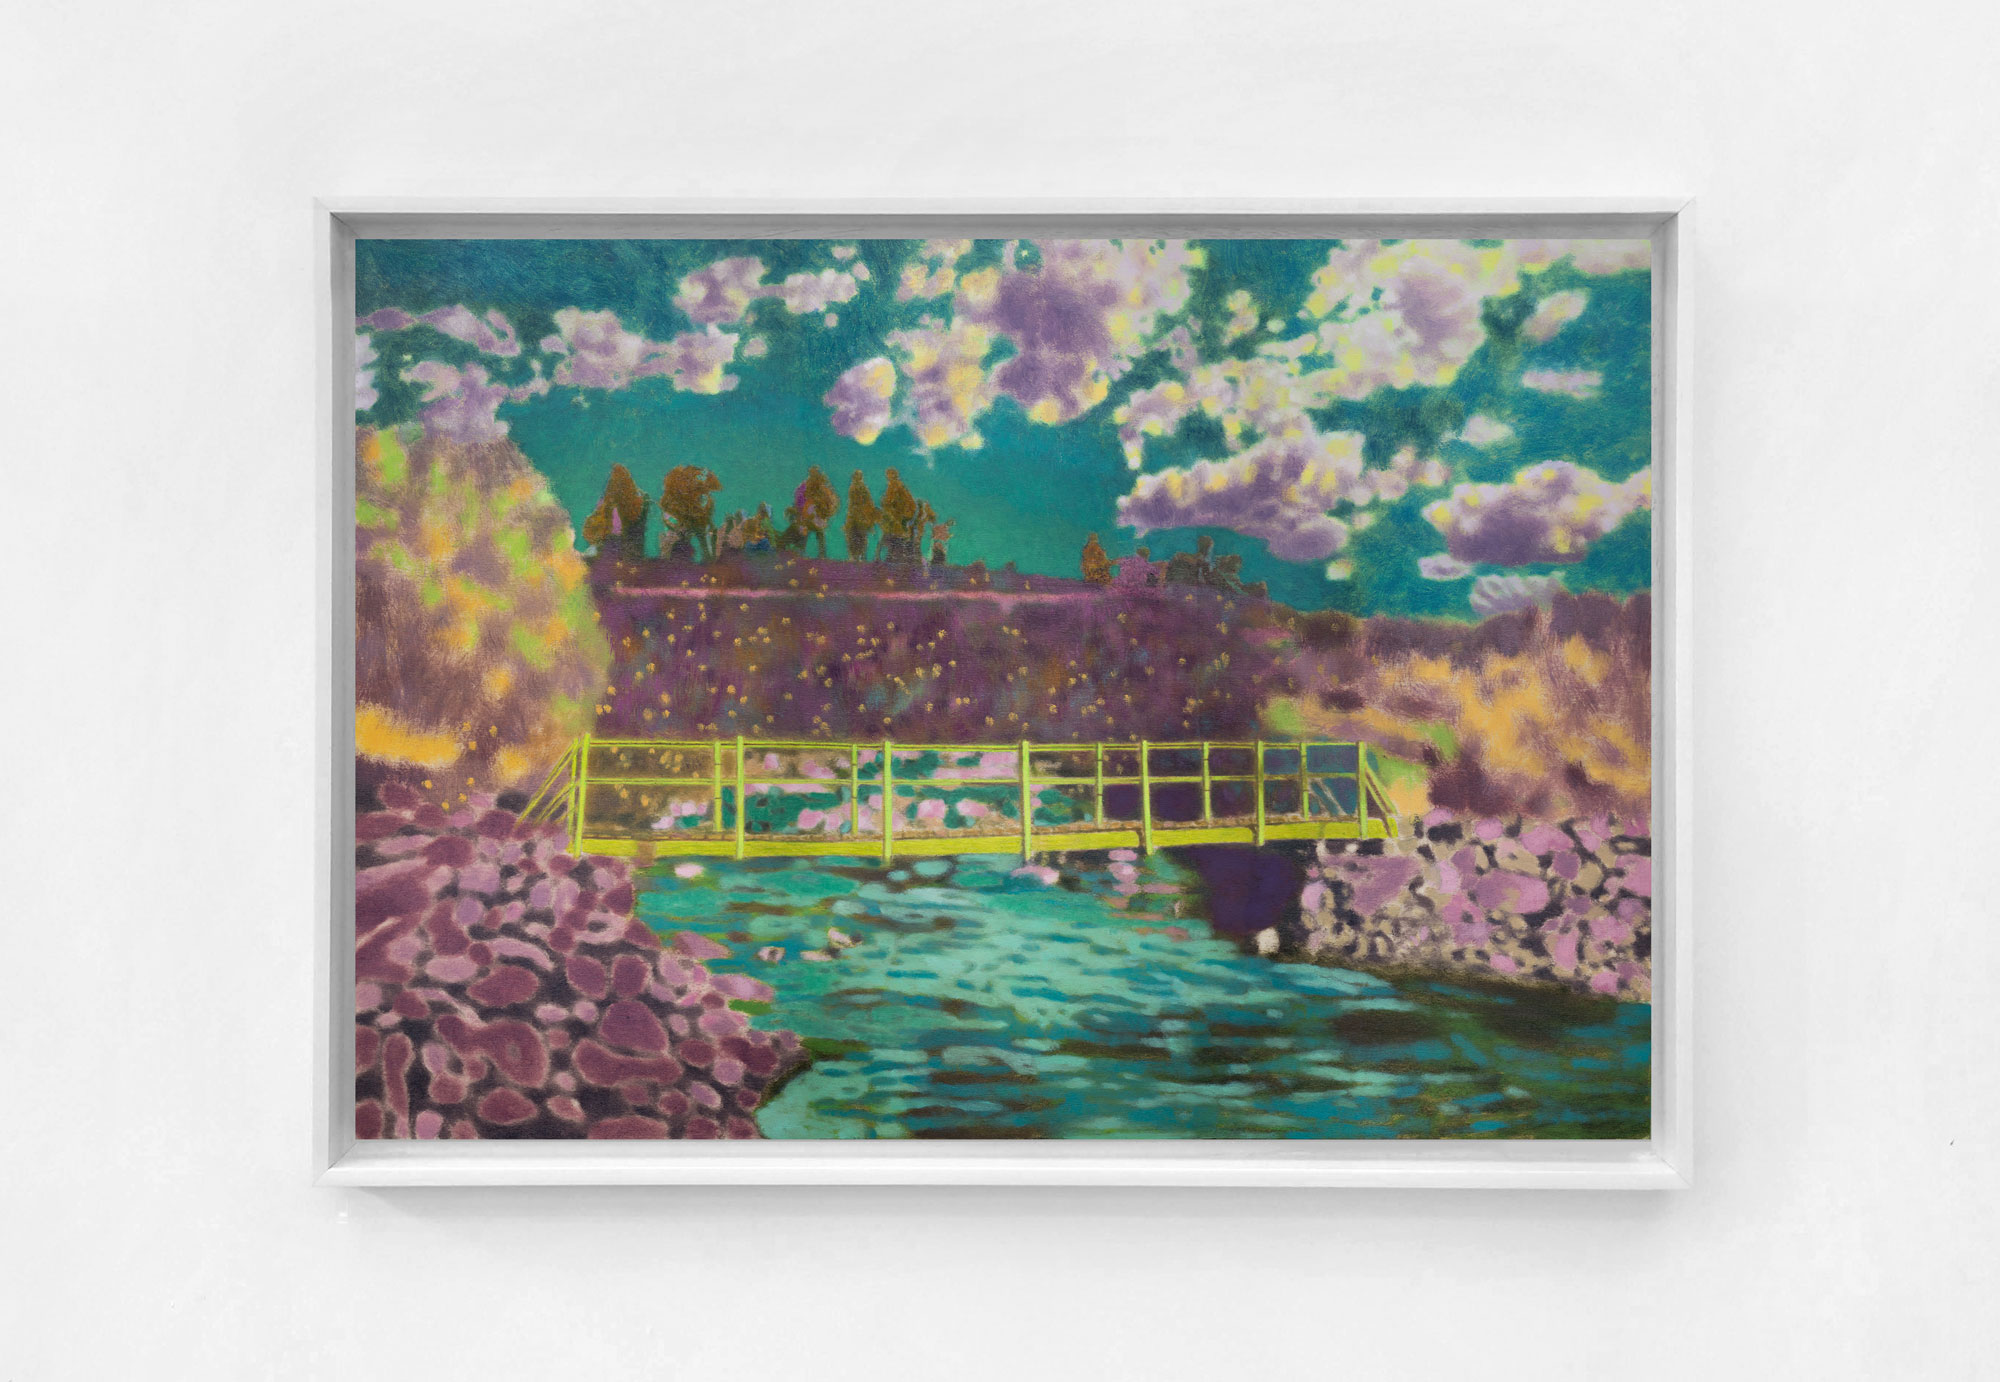 Karolina Orzełek, "Moonlight island", 2021, 72 x 50 cm, oil on panel